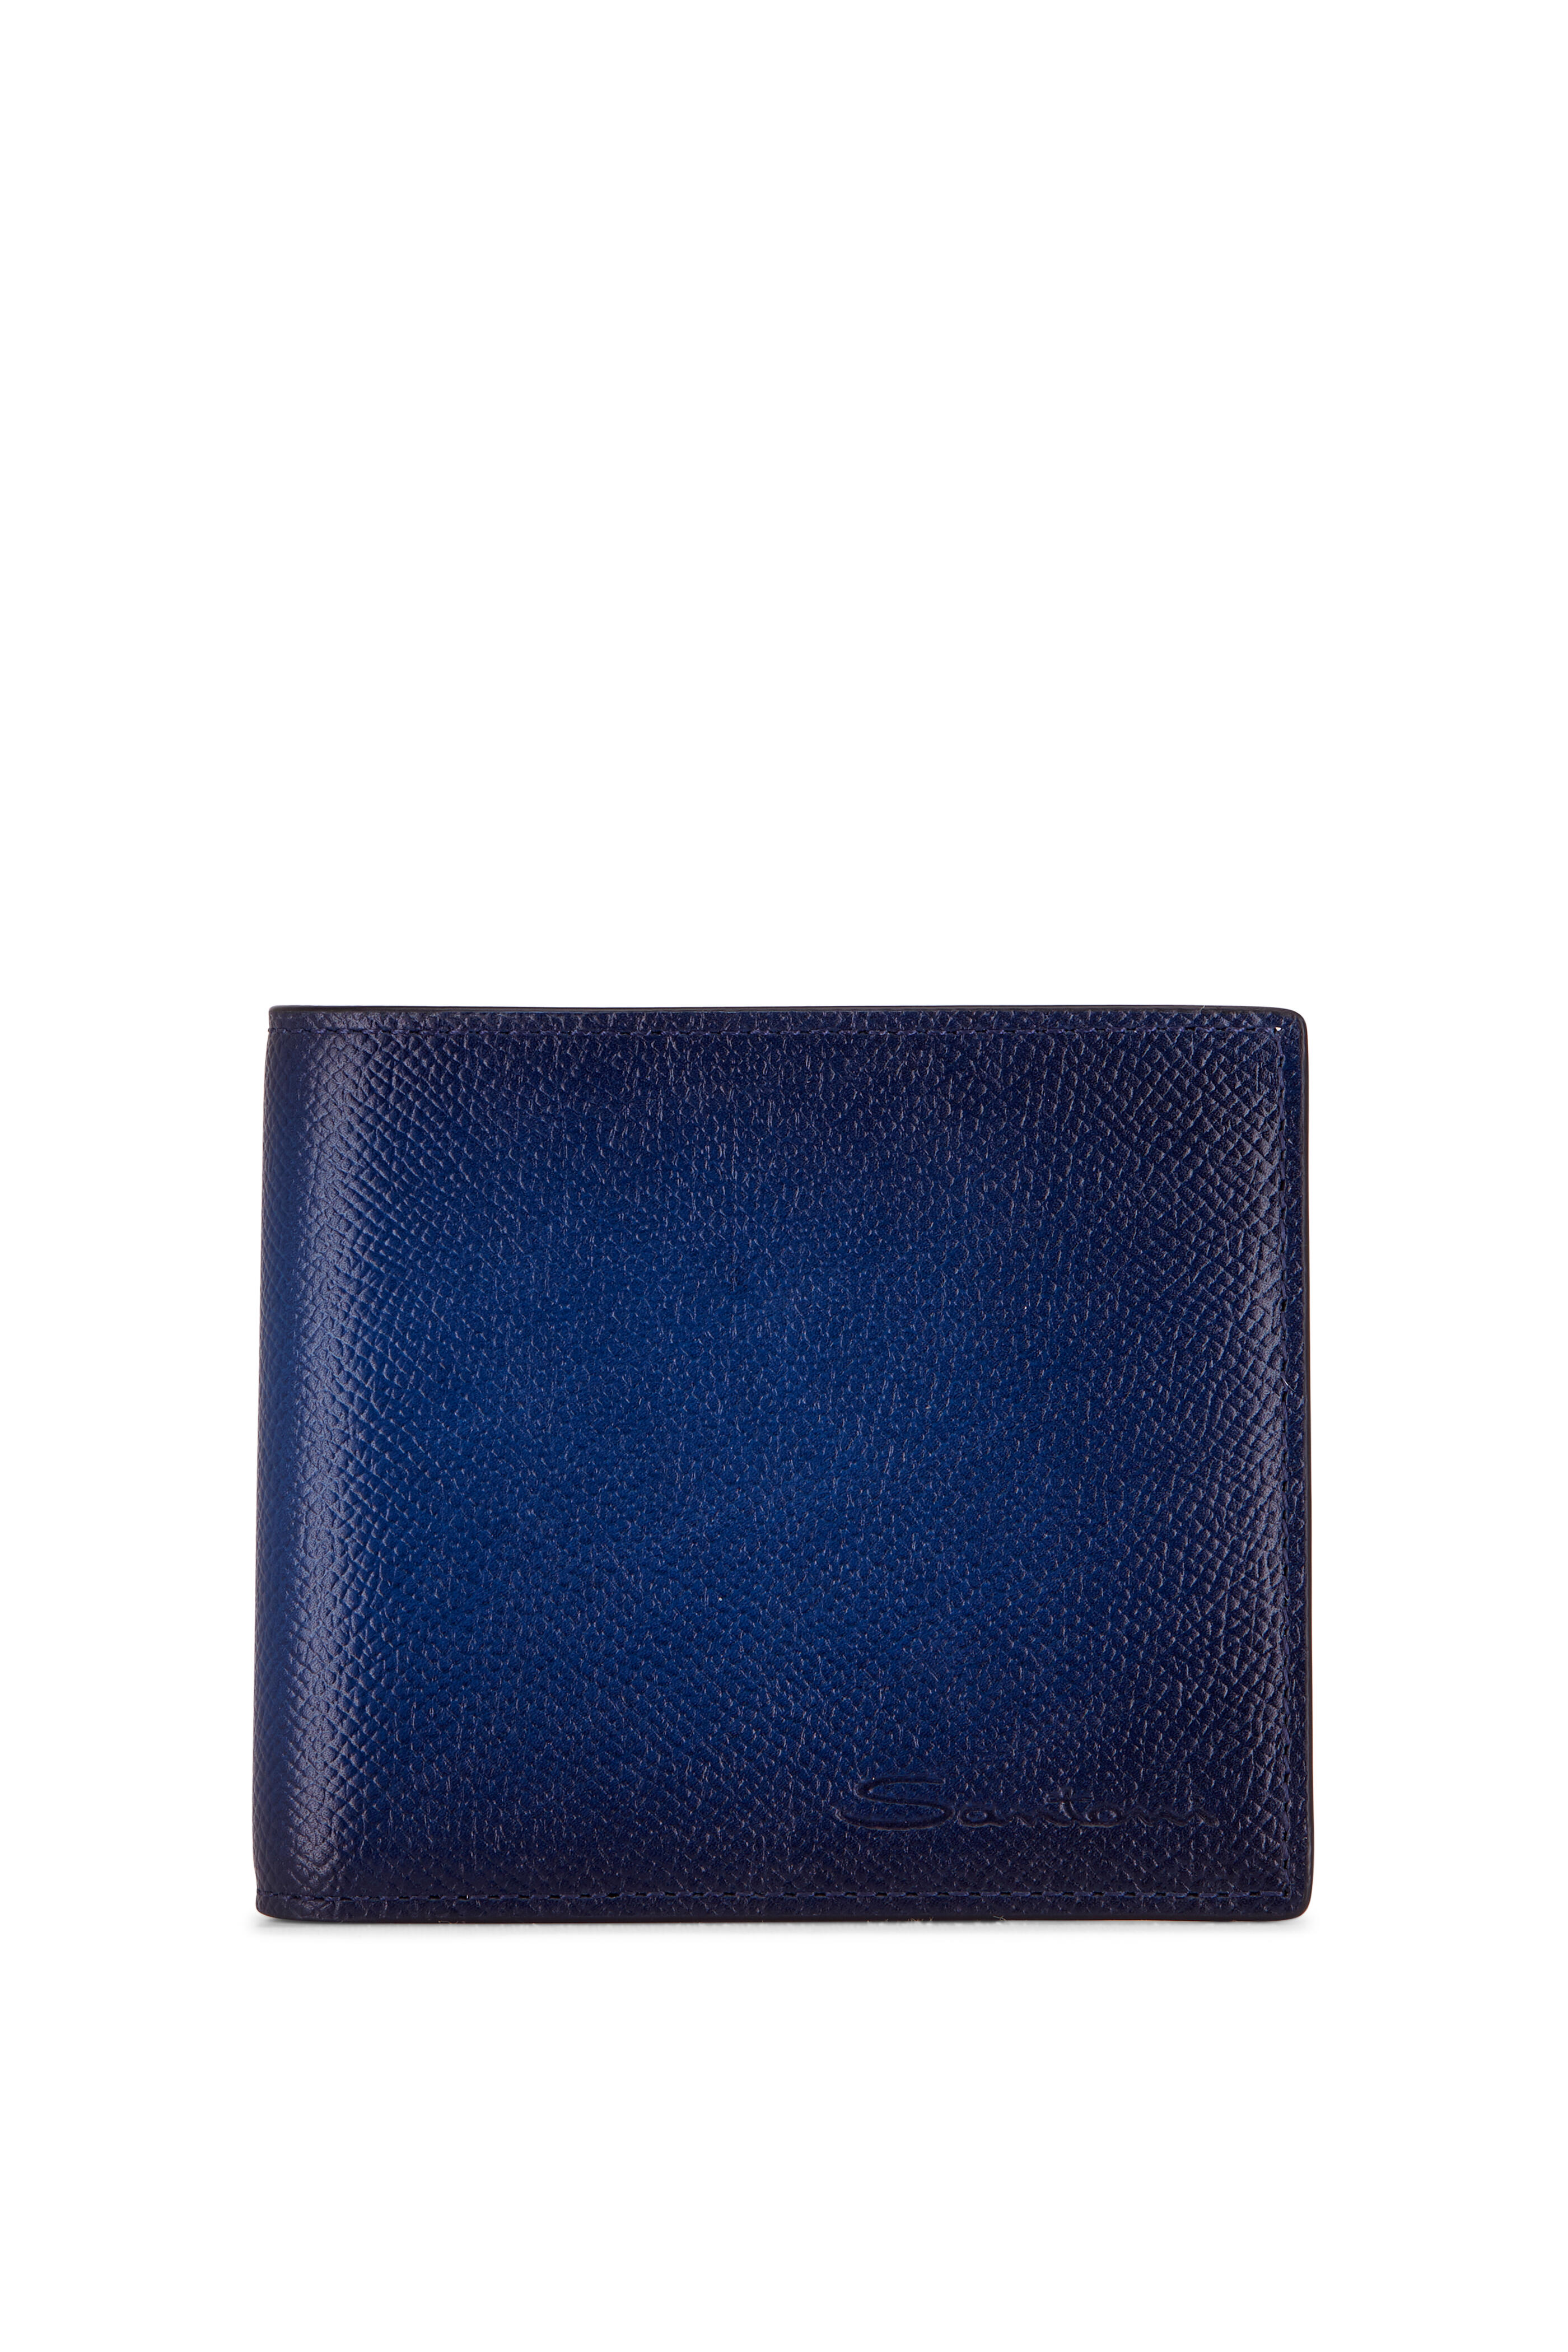 St. Louis Blues Leather Bi-Fold Wallet Packaged in Gift Box